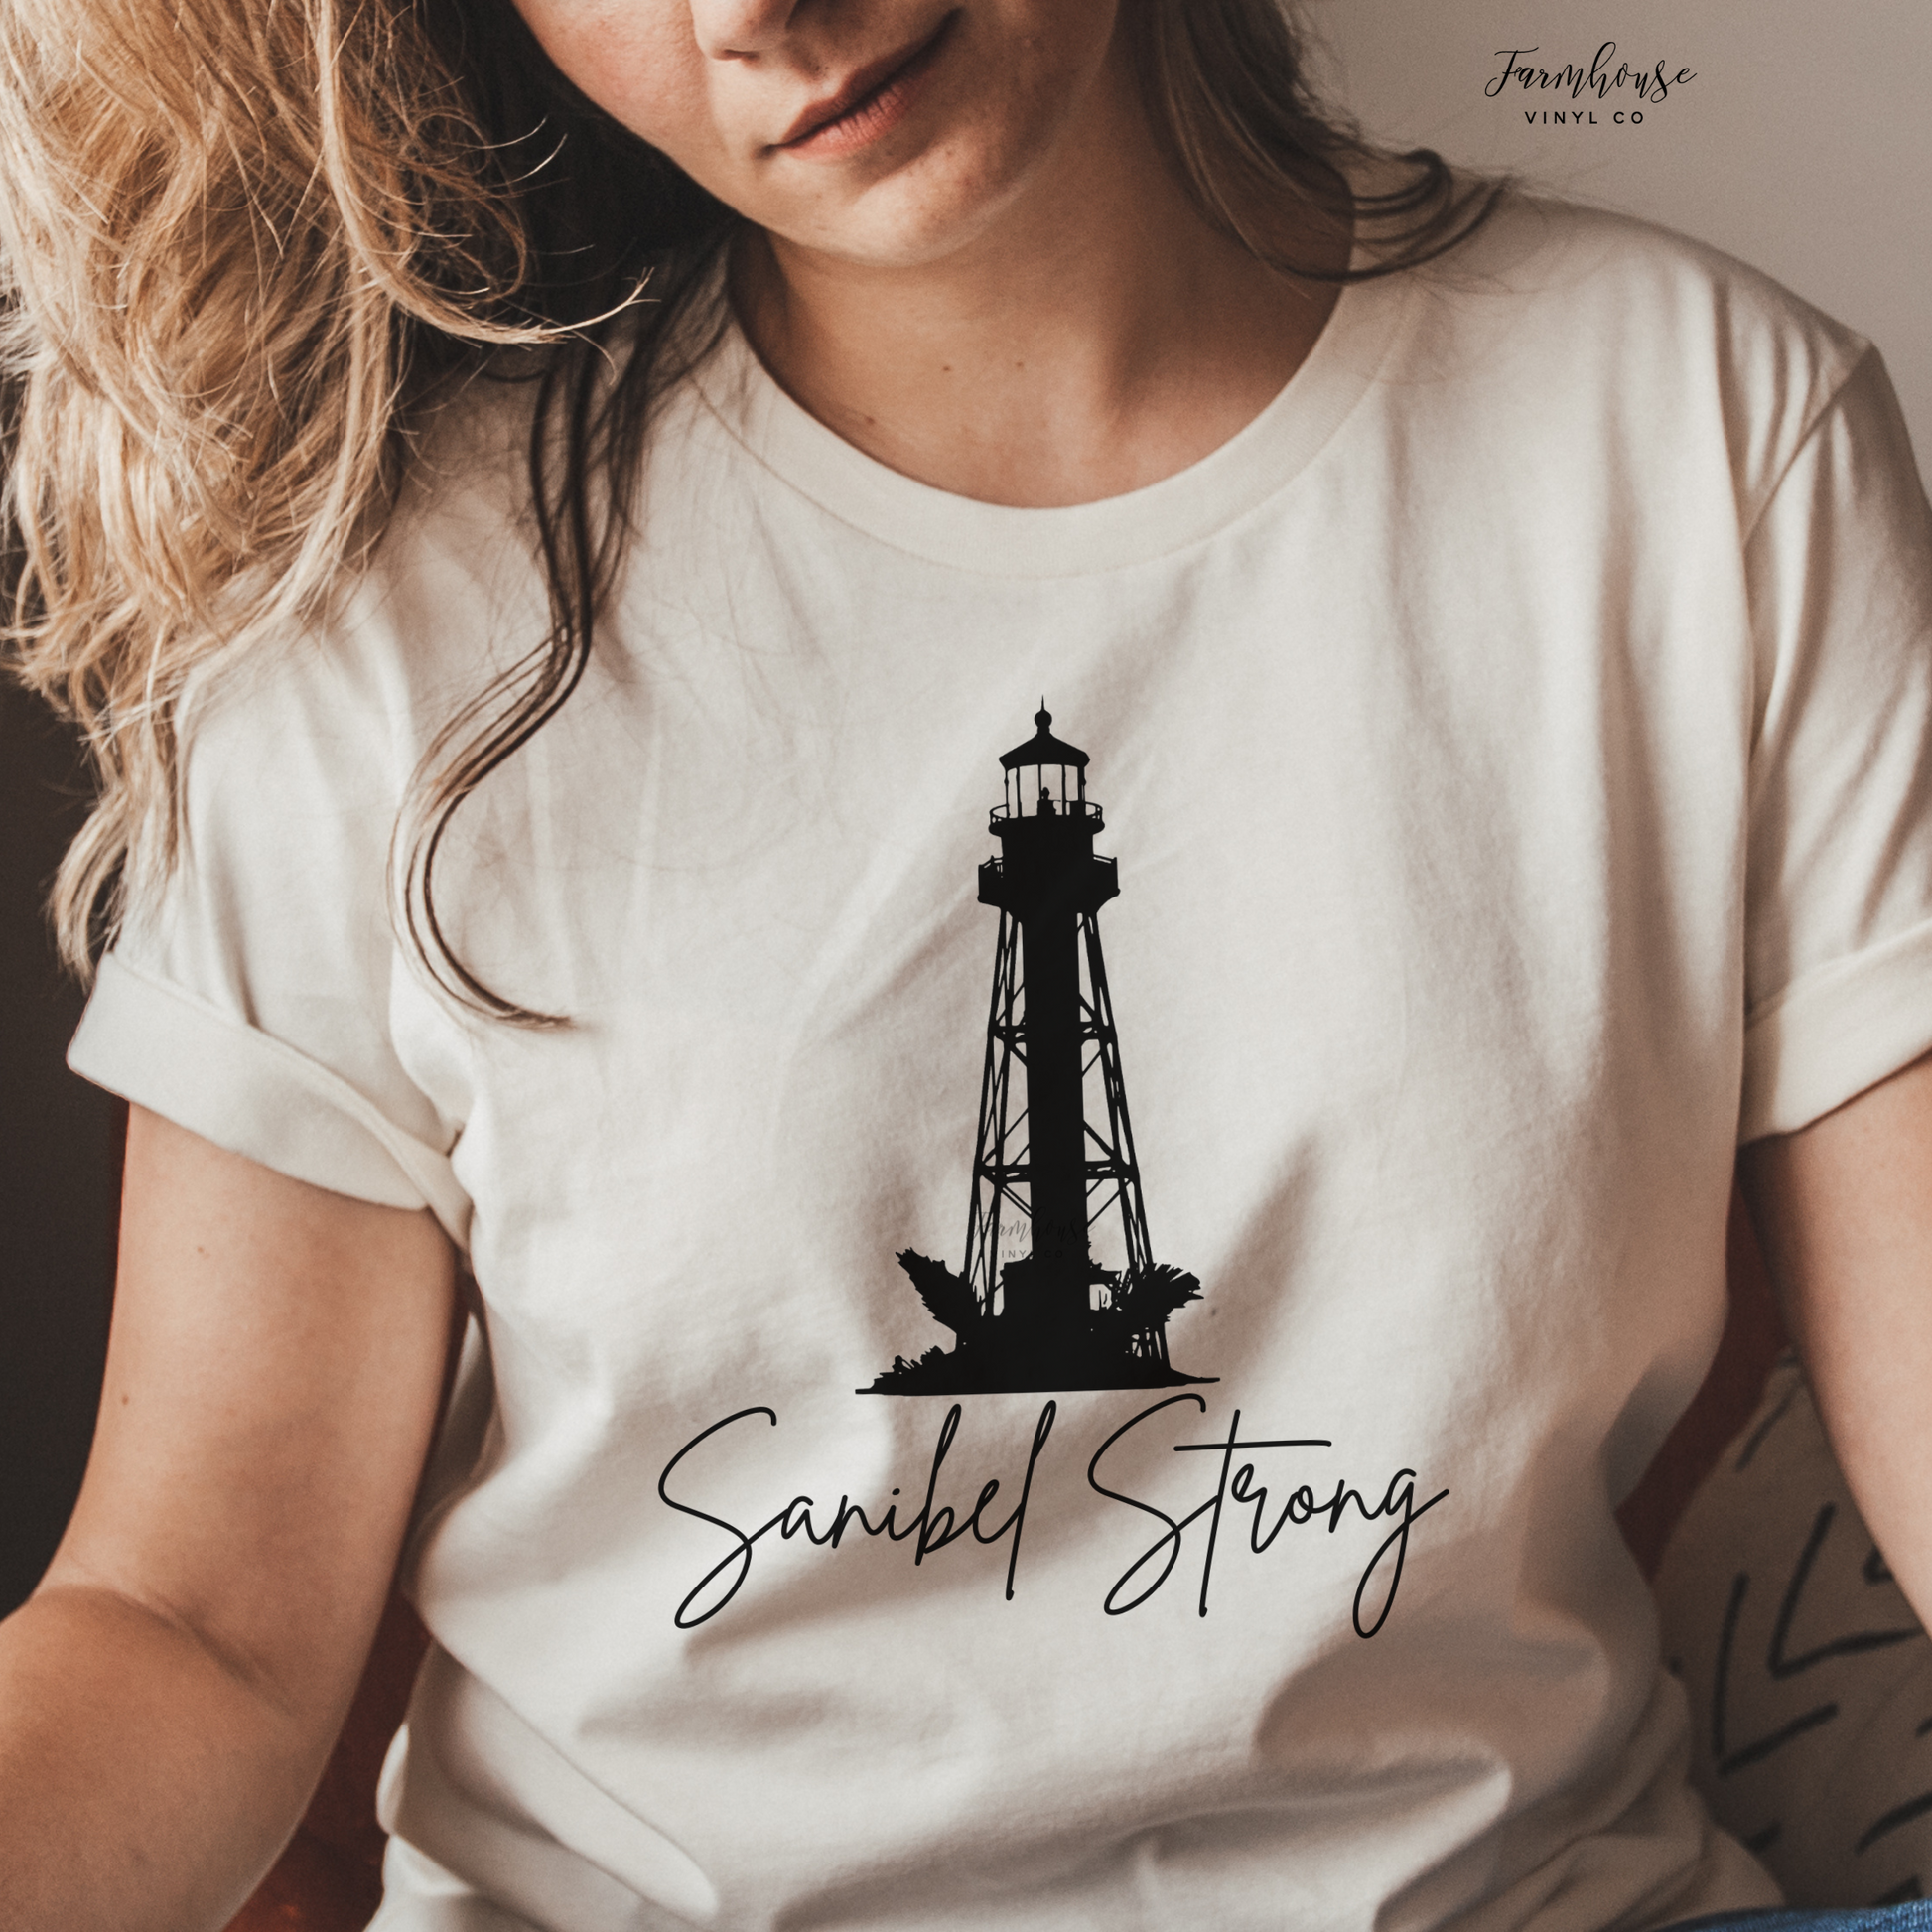 Sanibel Strong Lighthouse Shirt - Farmhouse Vinyl Co